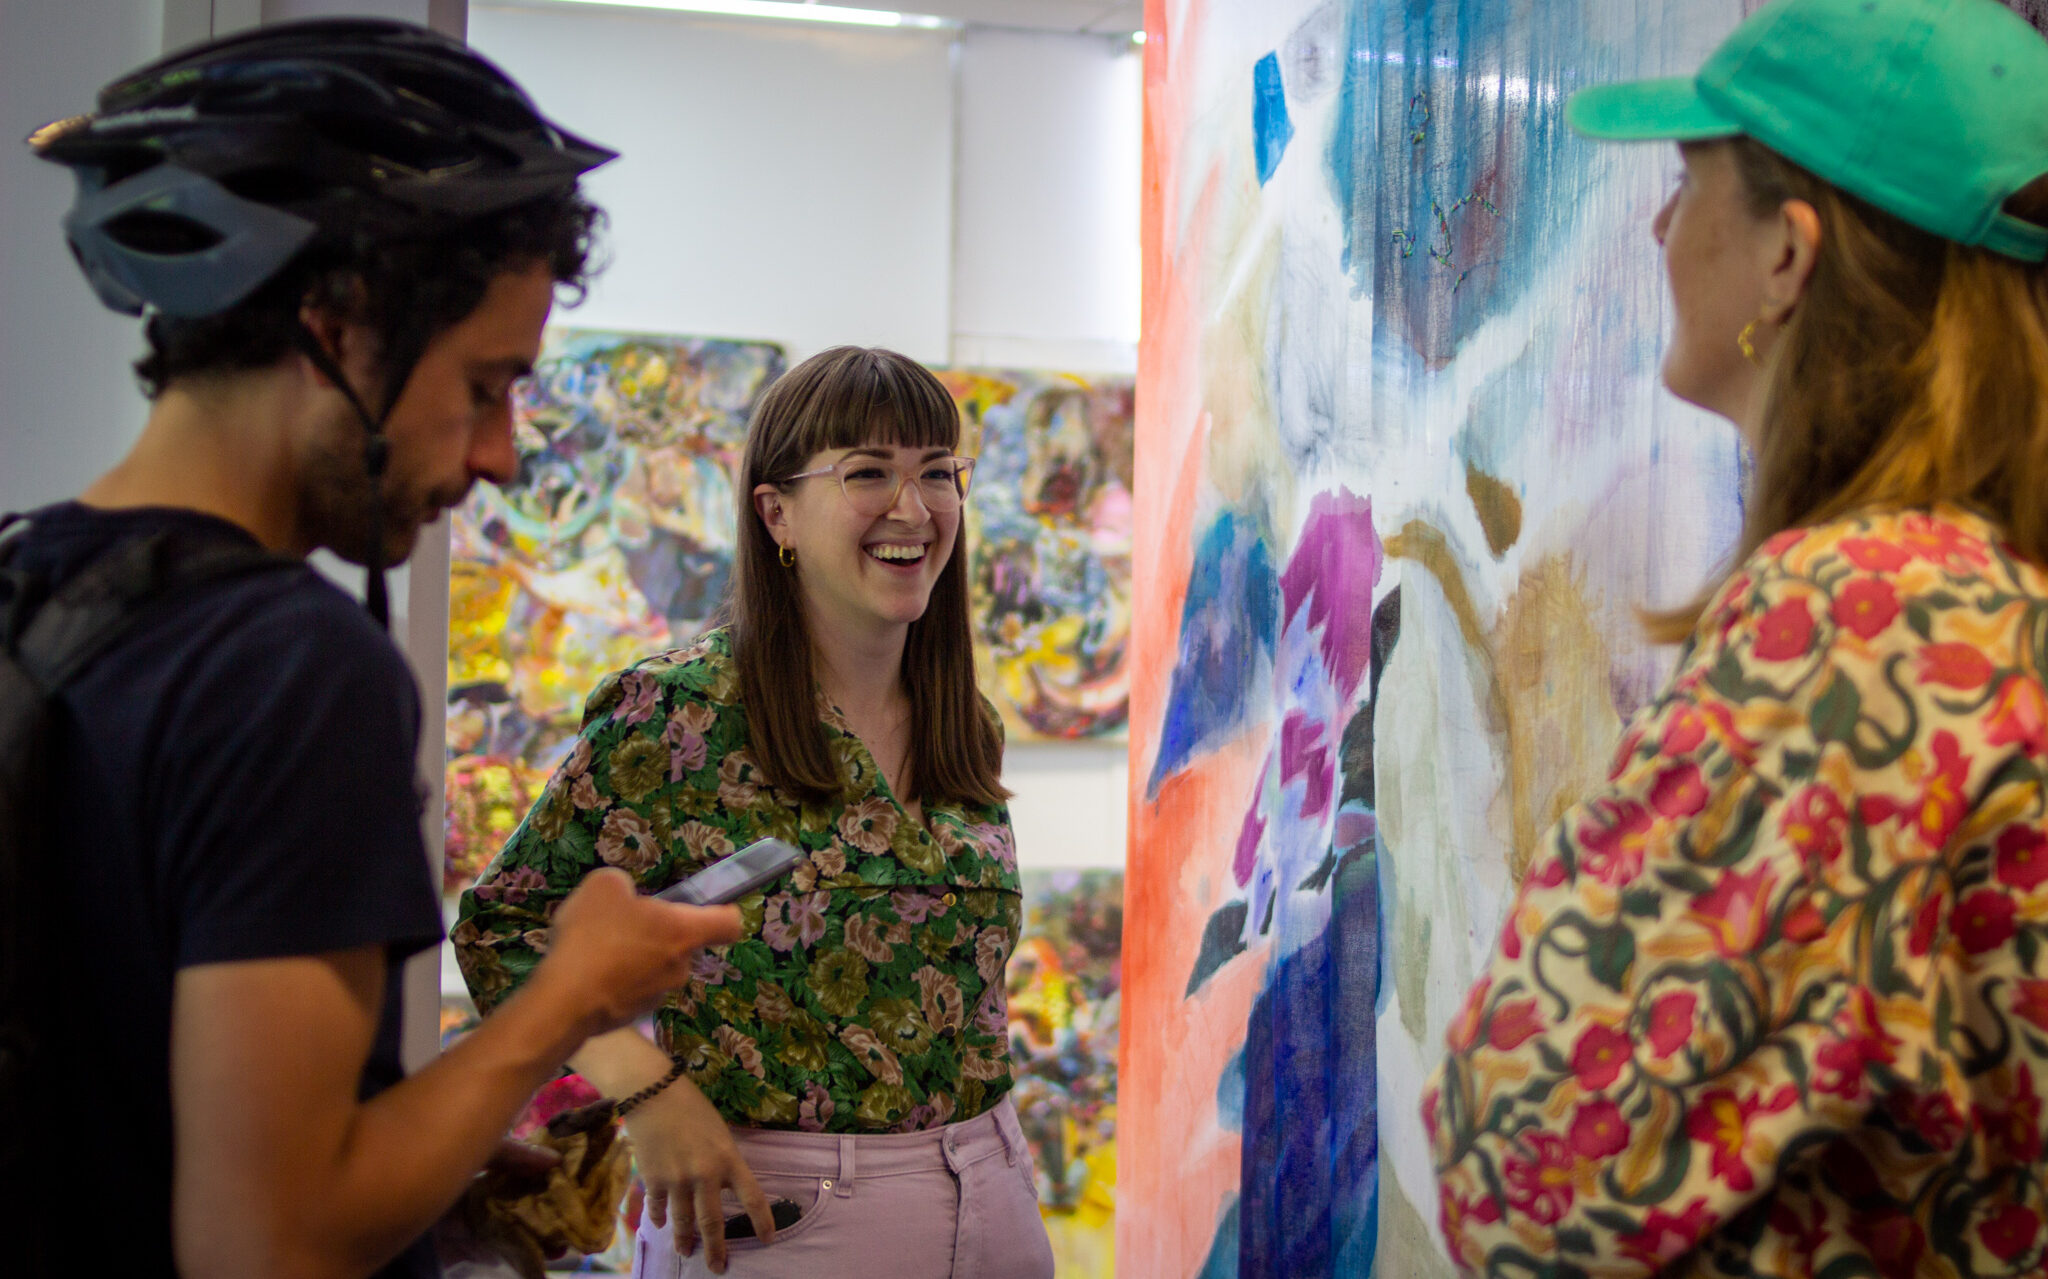 Artist Ellie Shipman talking in studio surrounded by artwork